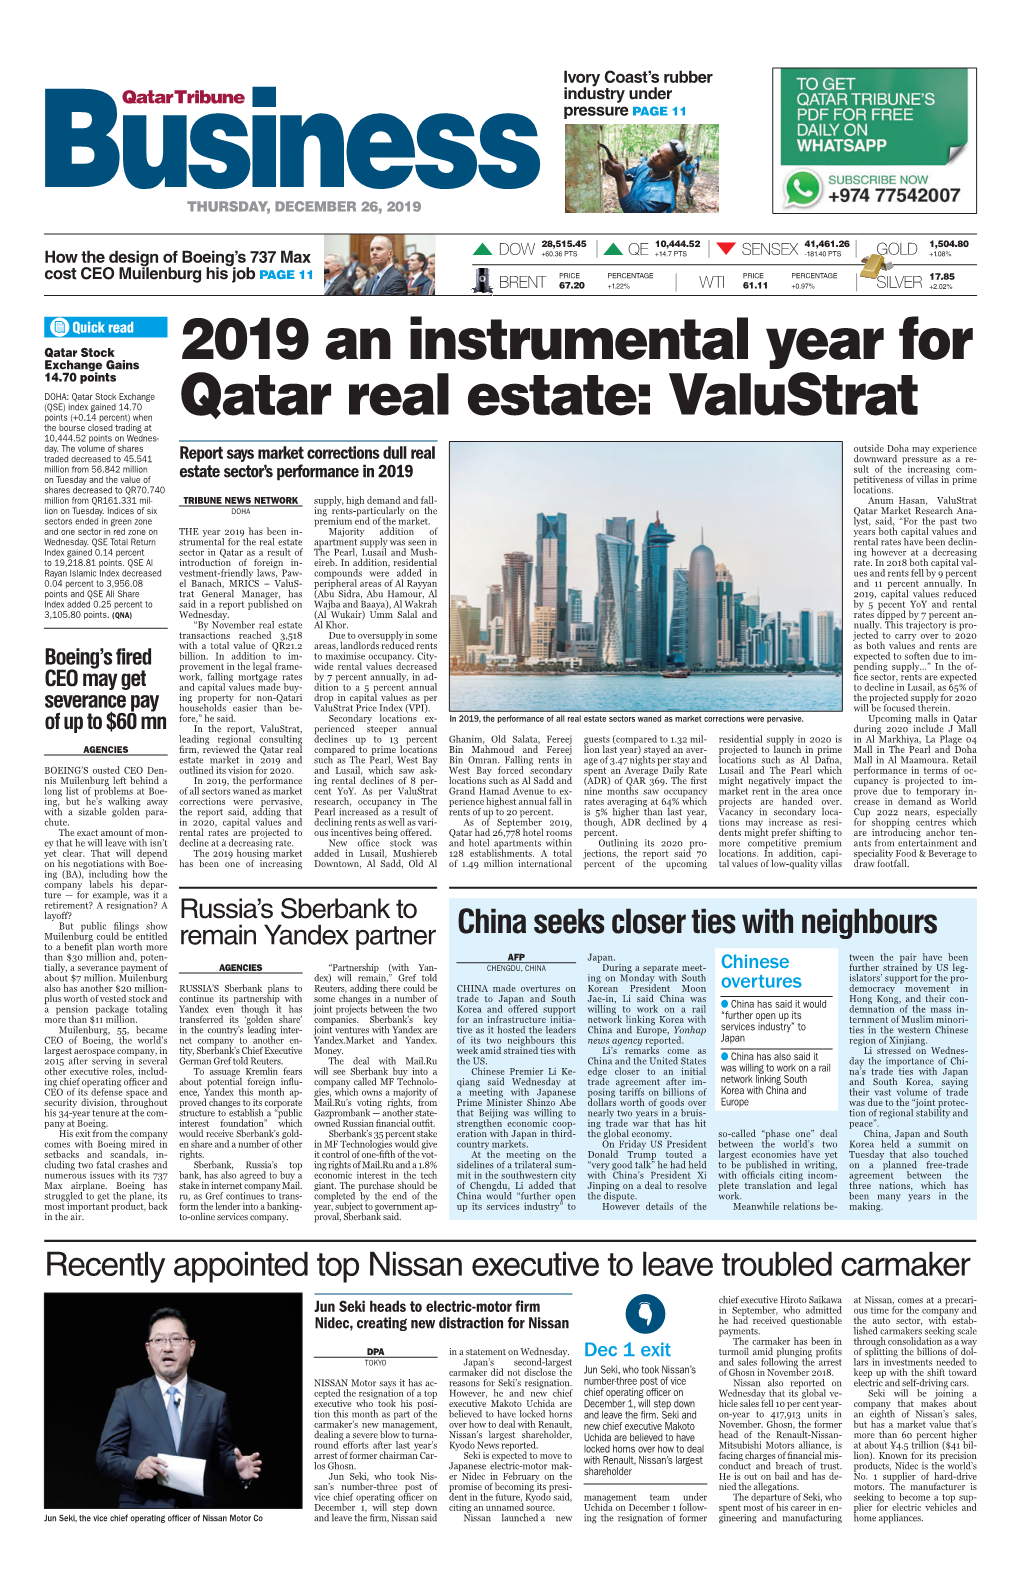 2019 an Instrumental Year for Qatar Real Estate: Valustrat